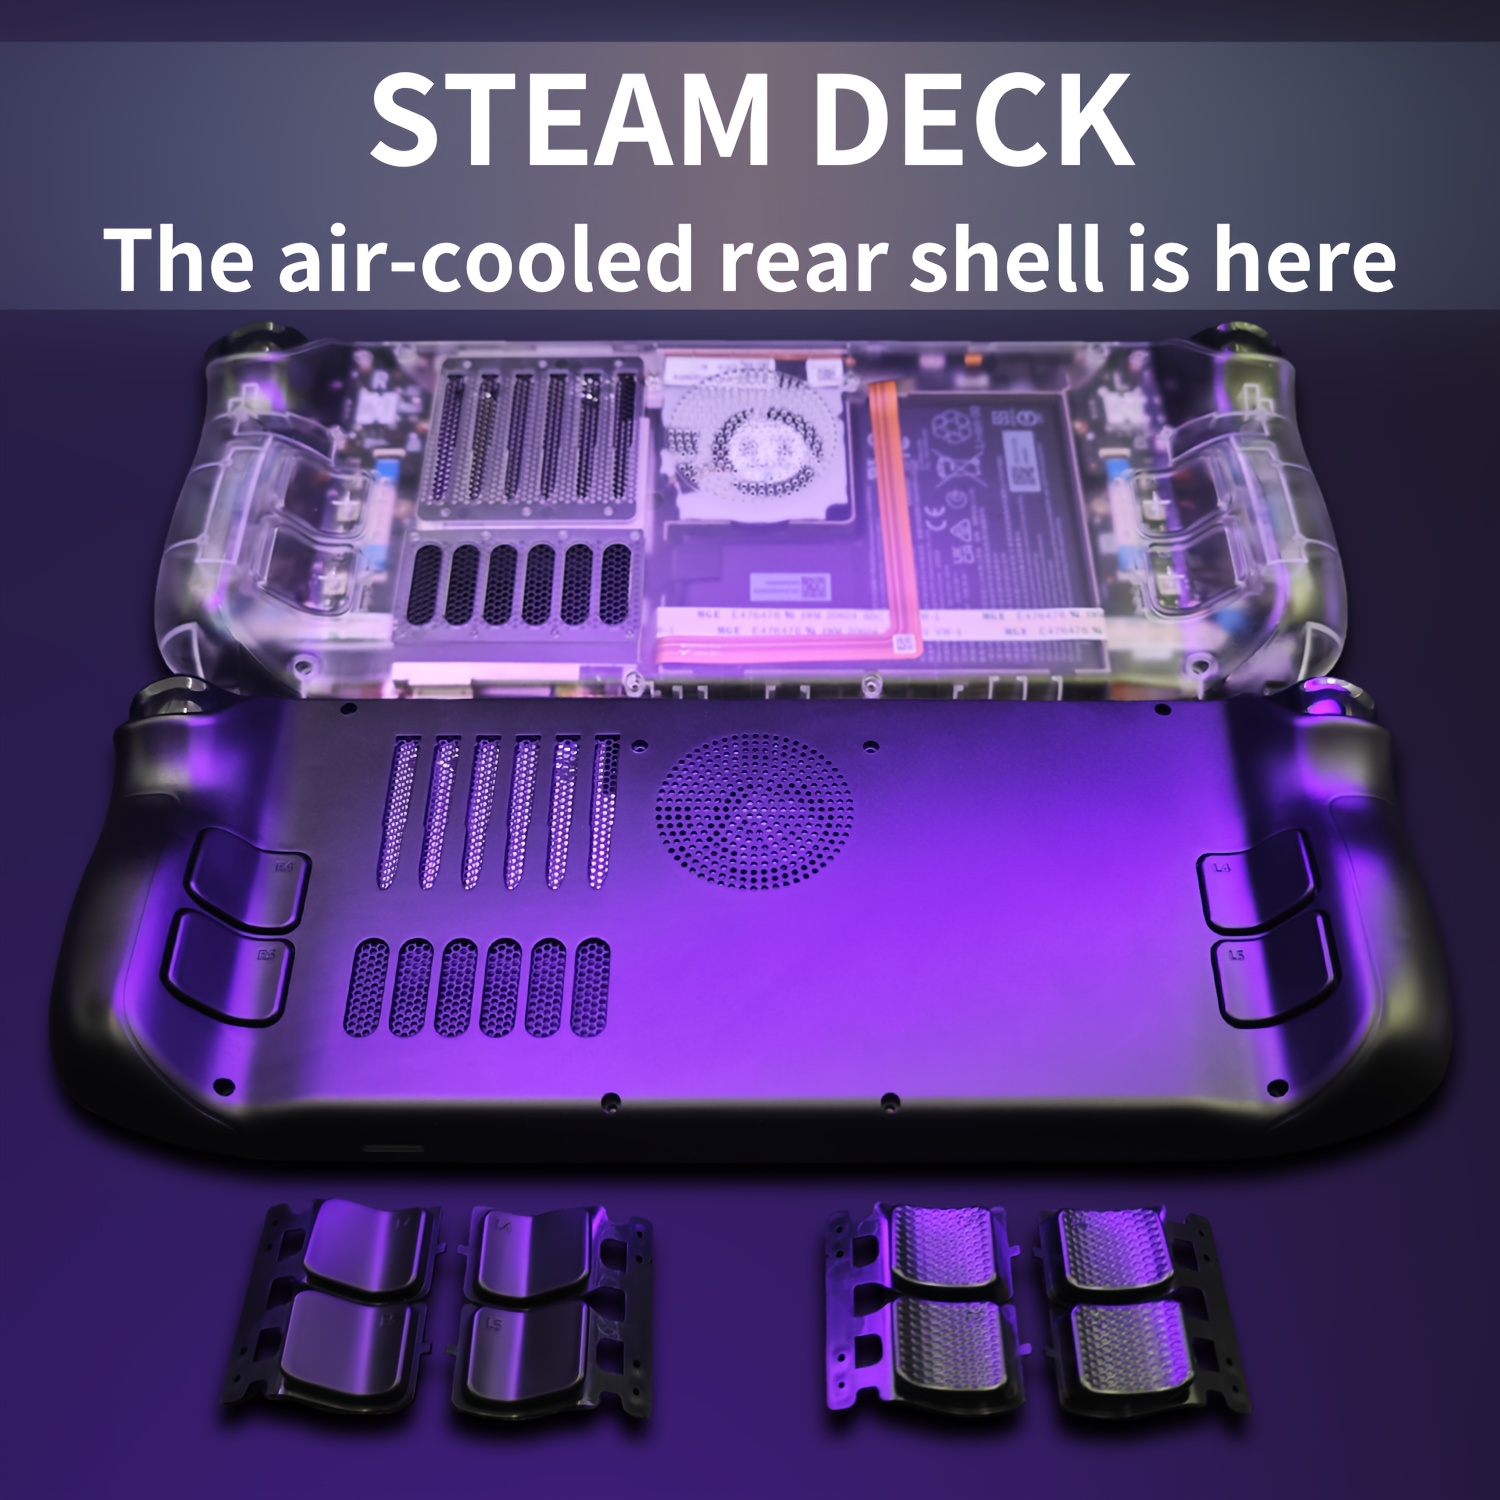 JSAUX Transparent Shells for Steam Deck Now Available! - Steam Deck HQ